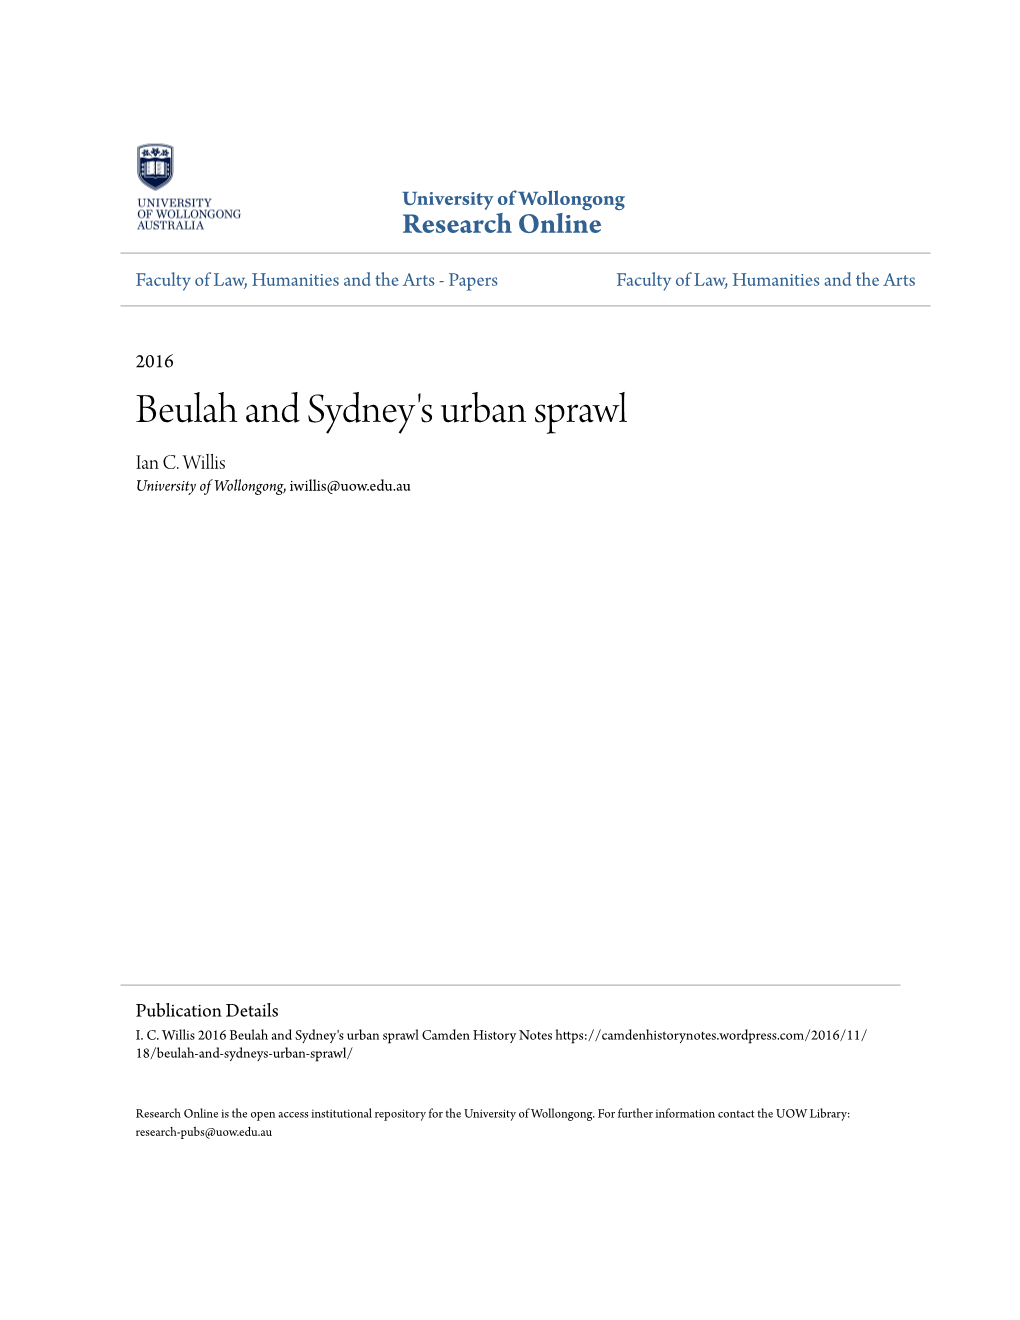 Beulah and Sydney's Urban Sprawl Ian C